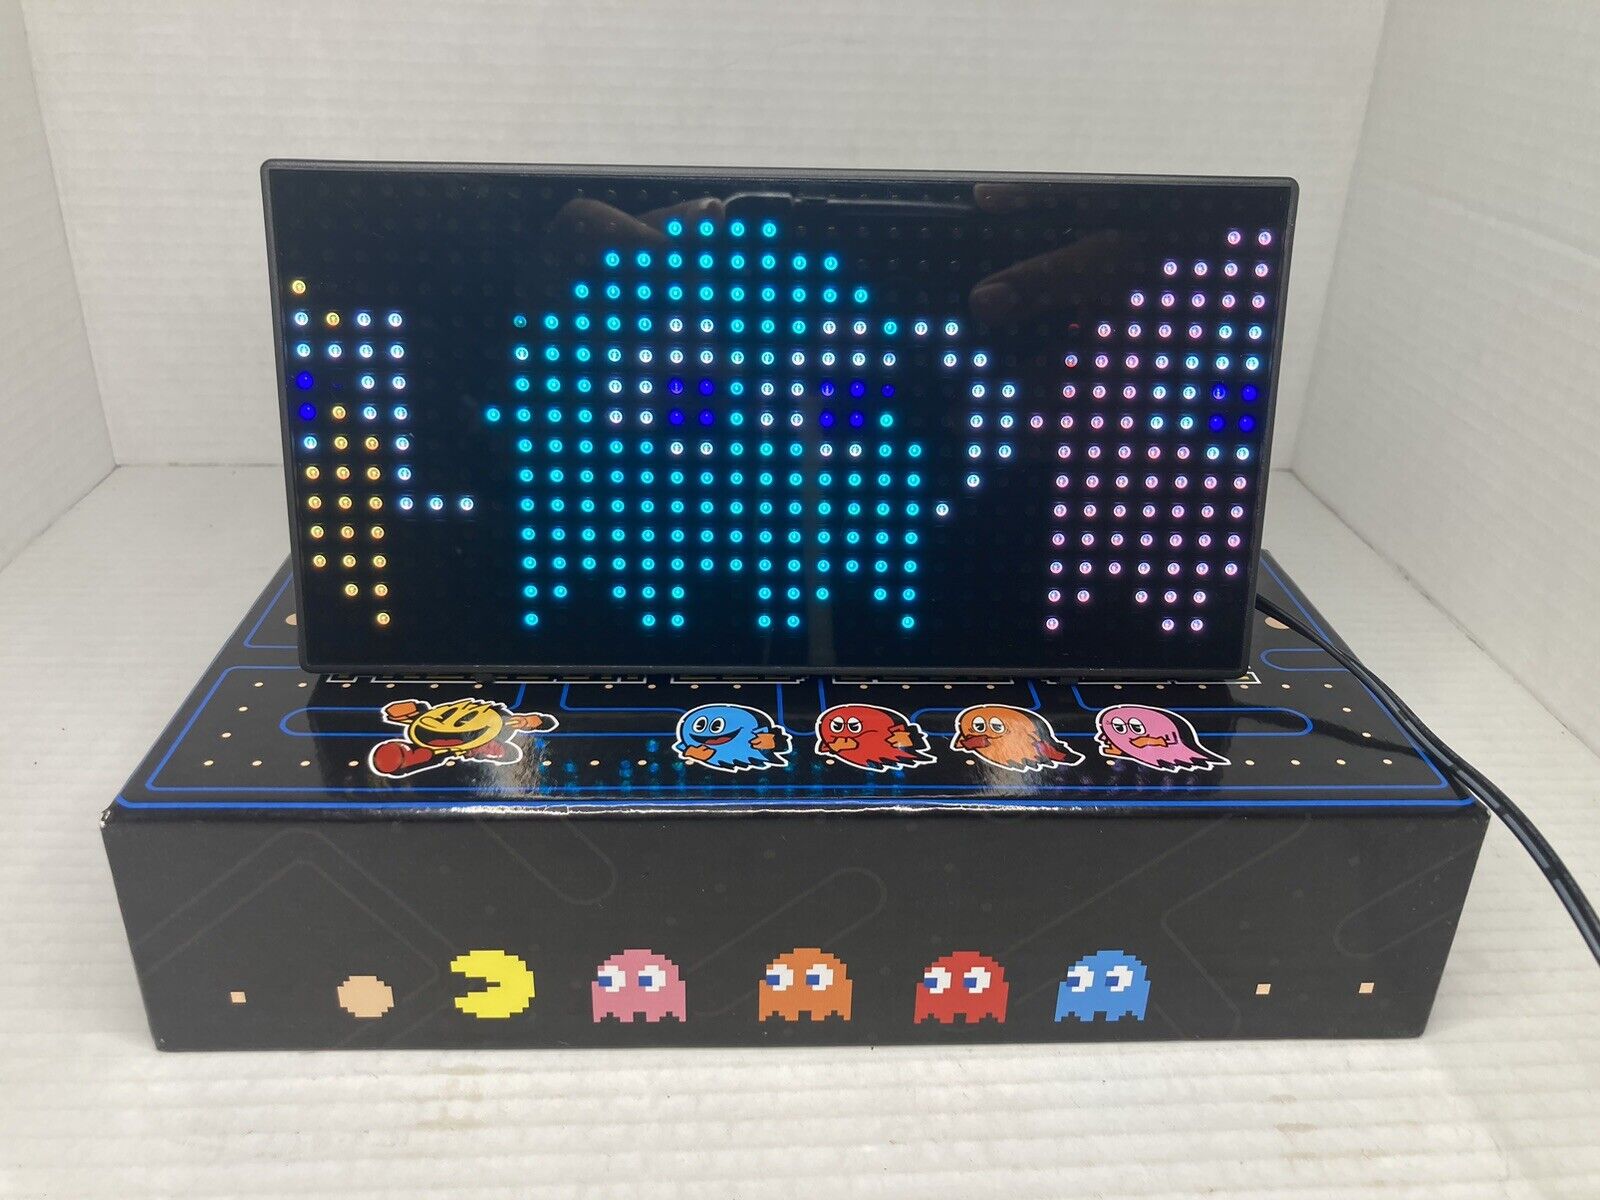 Pac-Man Premium LED Desk Clock Designed by Raw Thrills